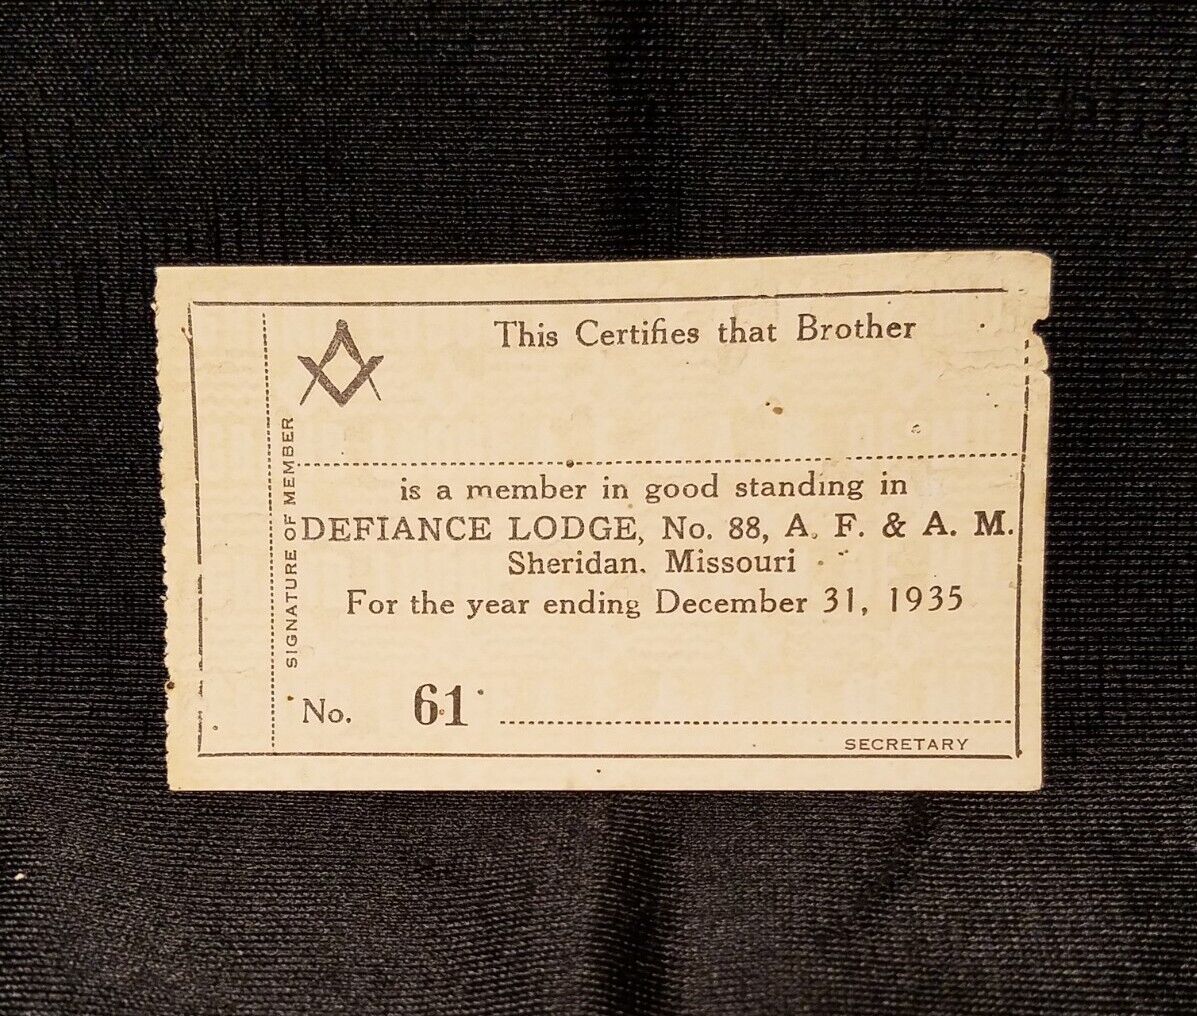 1935 Freemasonry Masonic Membership Card, Sheridan, Missouri - Defiance Lodge 